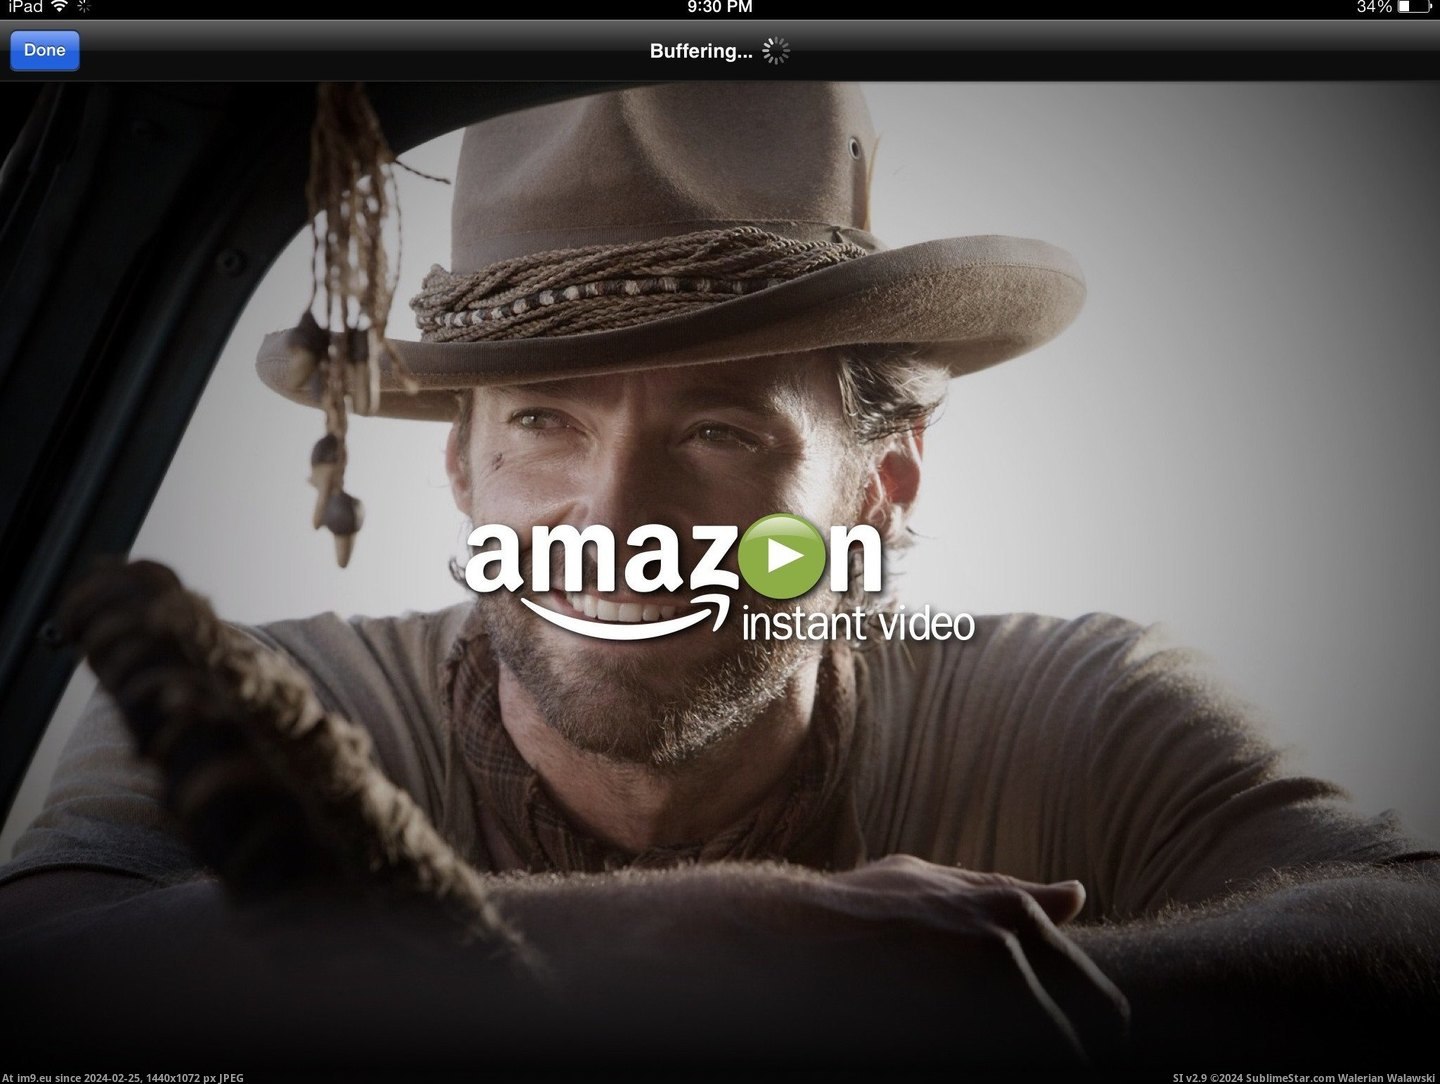 #Smile #Amazon #Jackman #Overlapped #Hugh #Loading [Mildlyinteresting] The Amazon 'smile' overlapped with Hugh Jackman's smile when loading Pic. (Obraz z album My r/MILDLYINTERESTING favs))